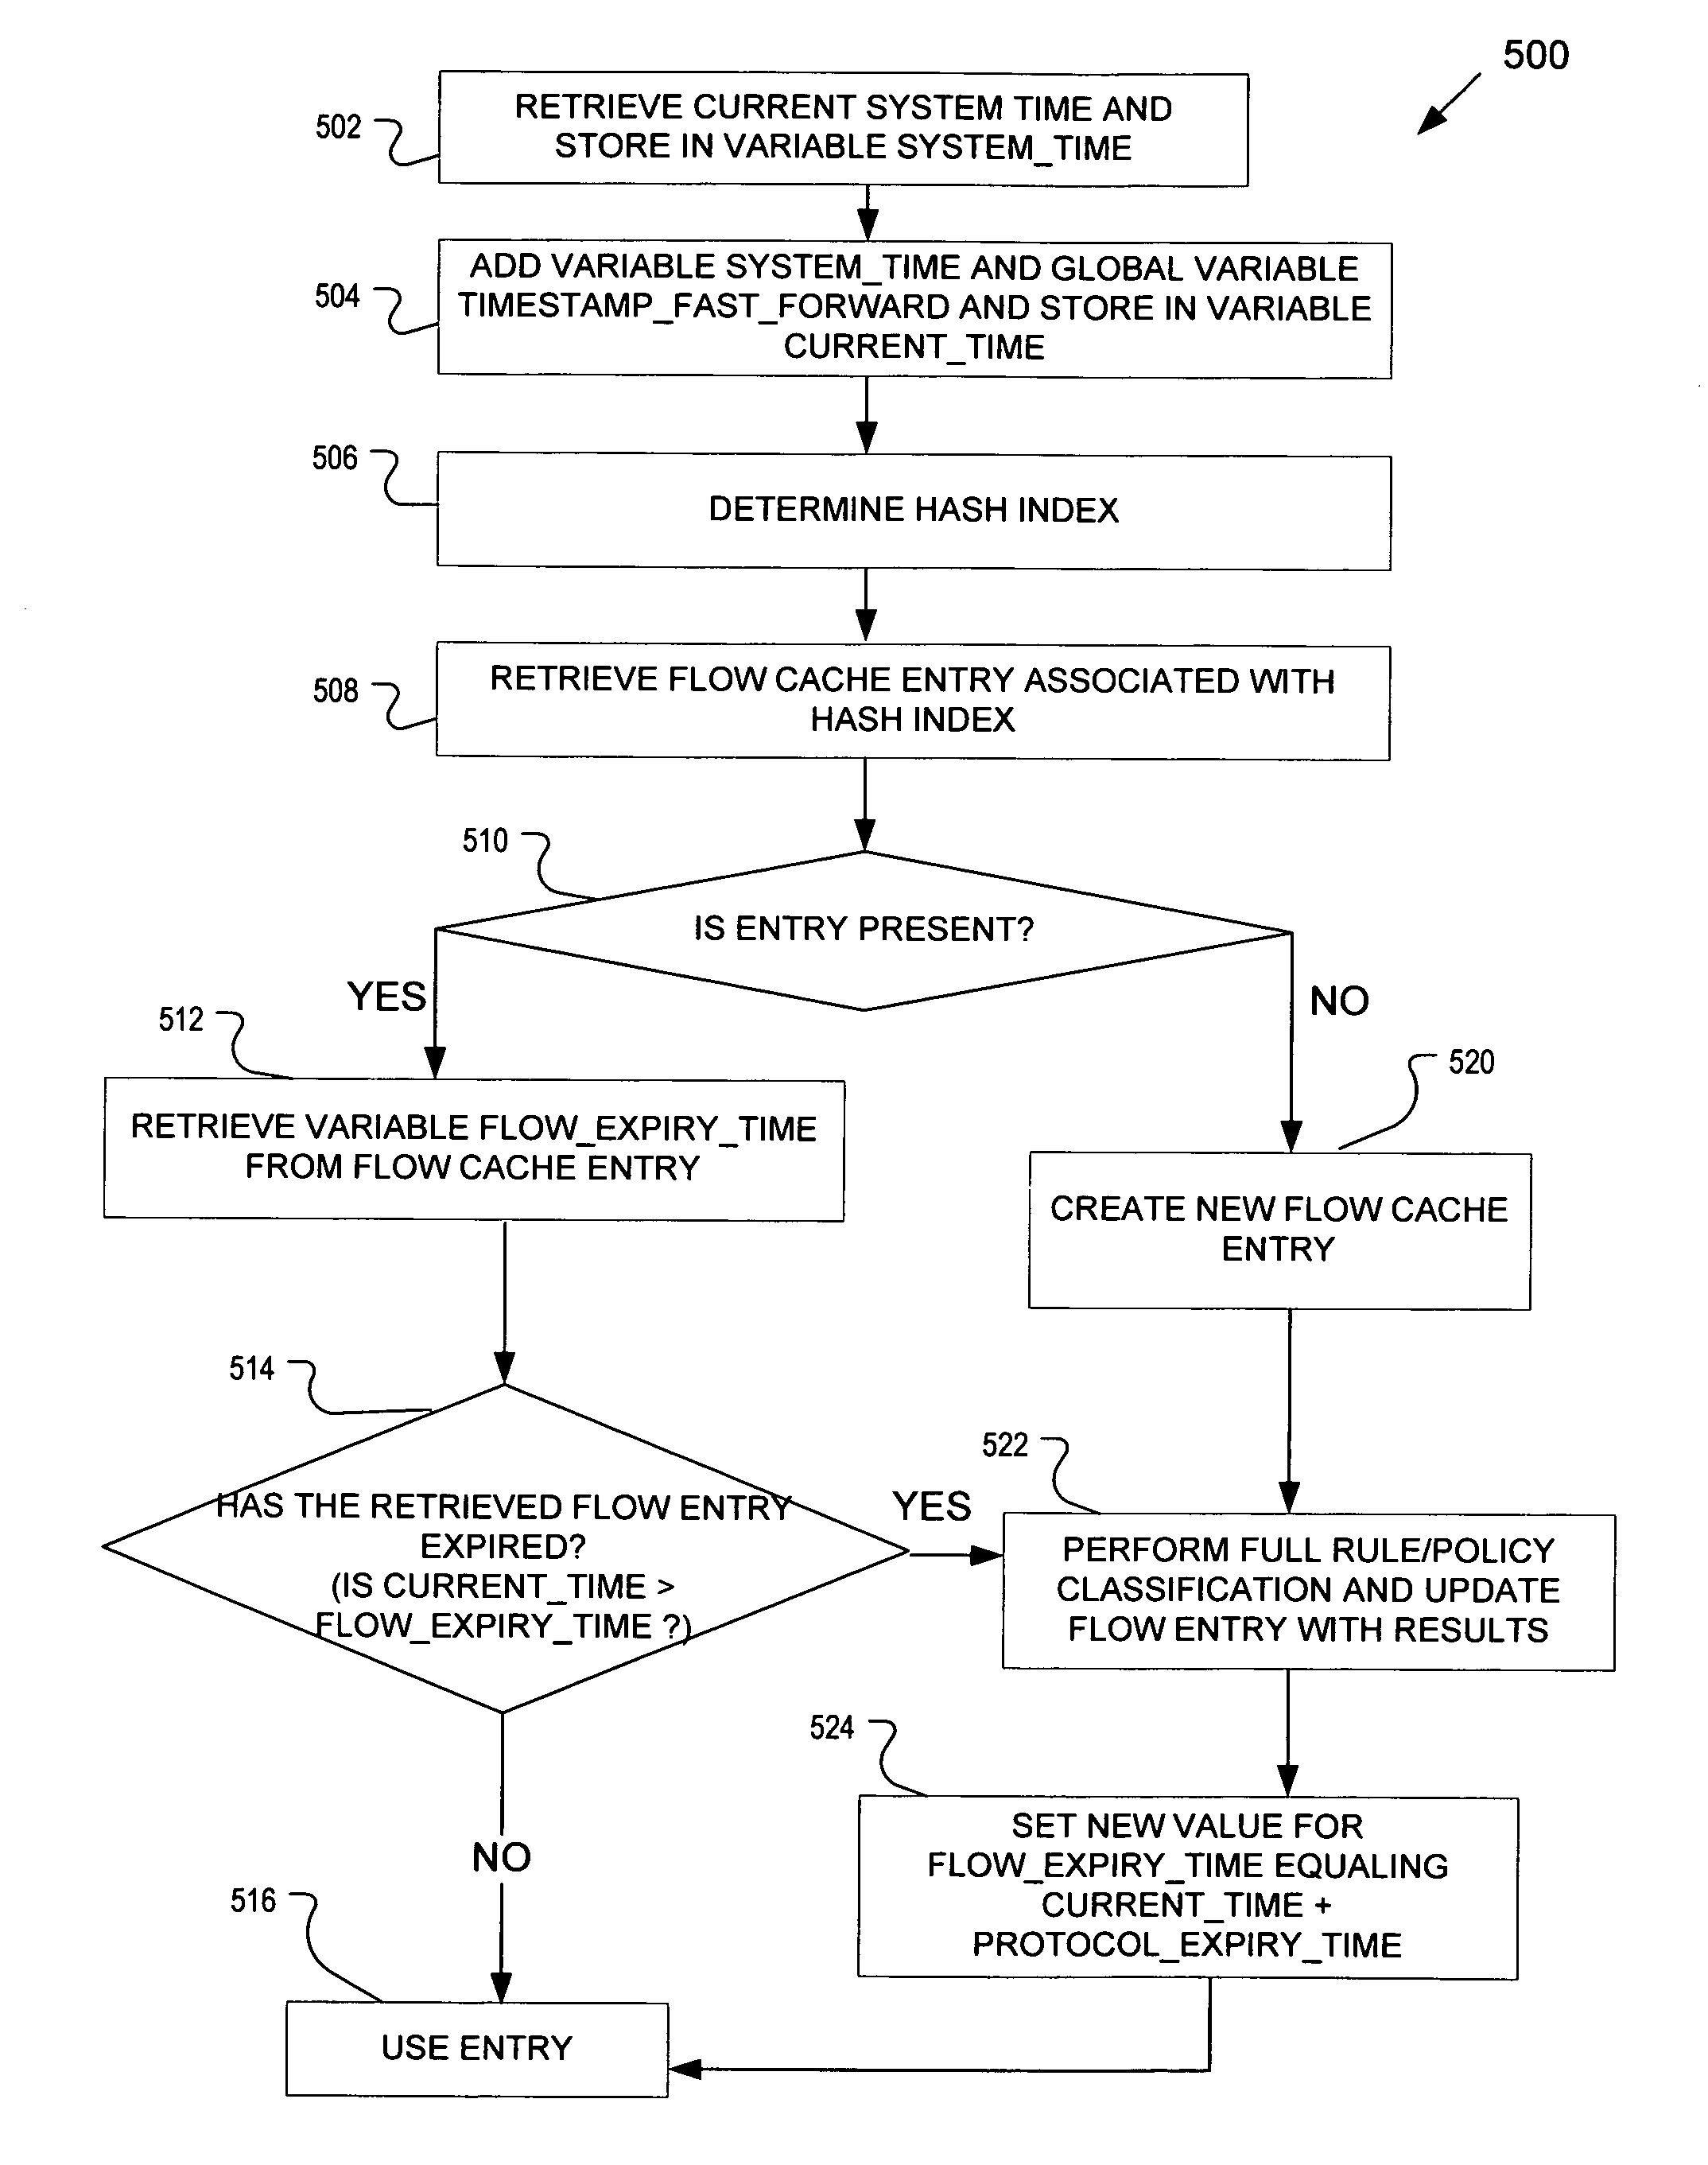 Techniques to manage a flow cache